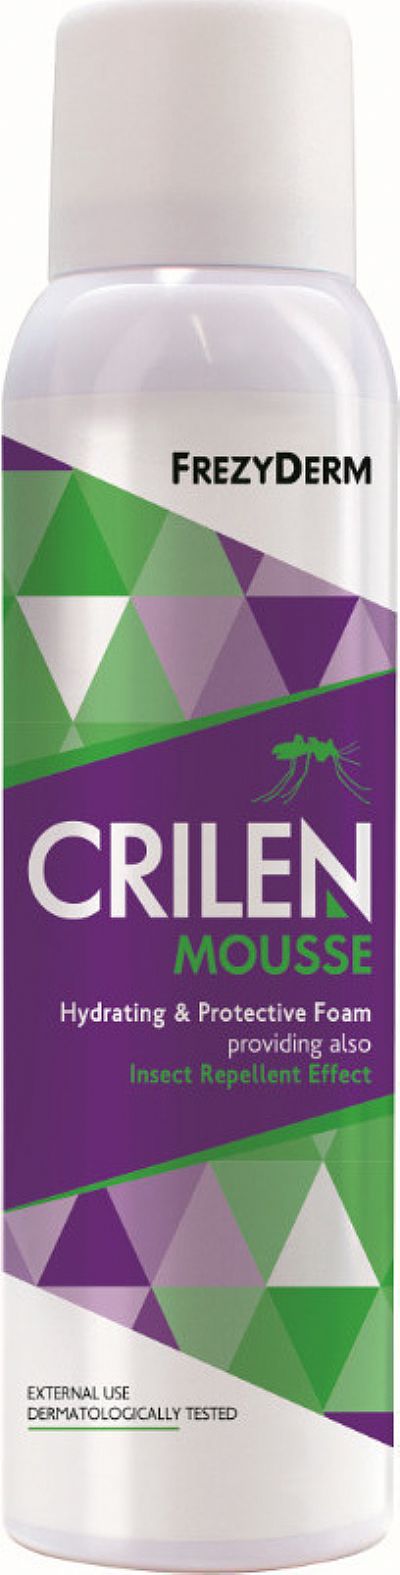 Frezyderm Crilen Mousse 150 ml